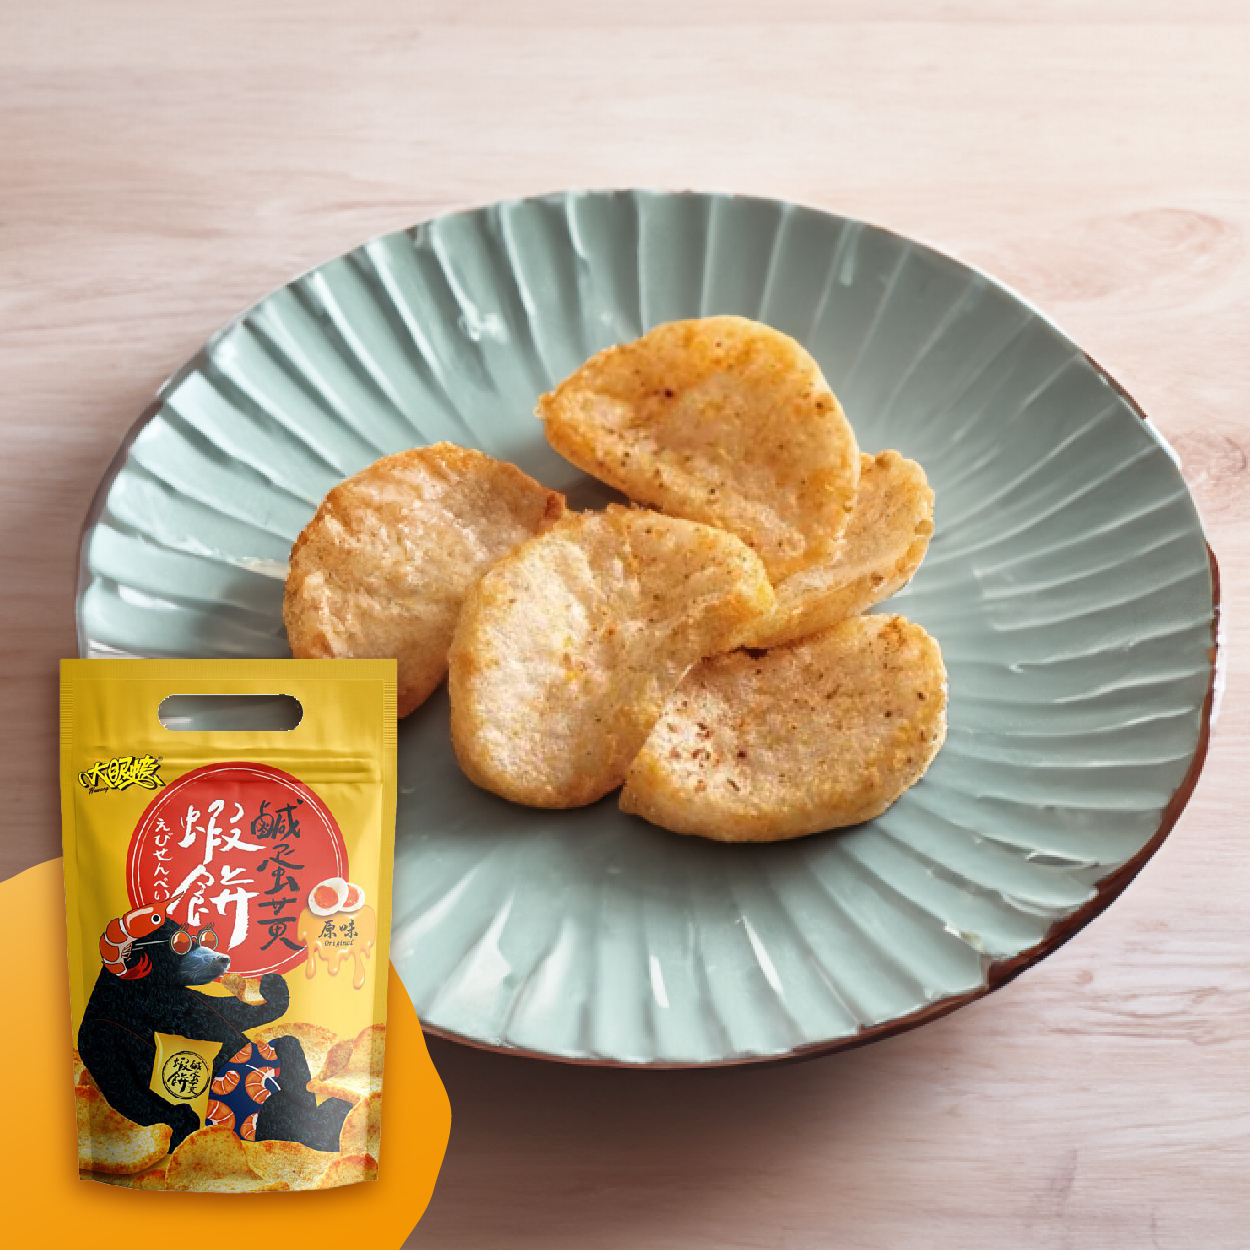 HUWANG 大眼蝦 蝦餅 （鹹蛋黃口味）金沙控為之瘋狂的蝦餅 絕對不能錯過的團購精品